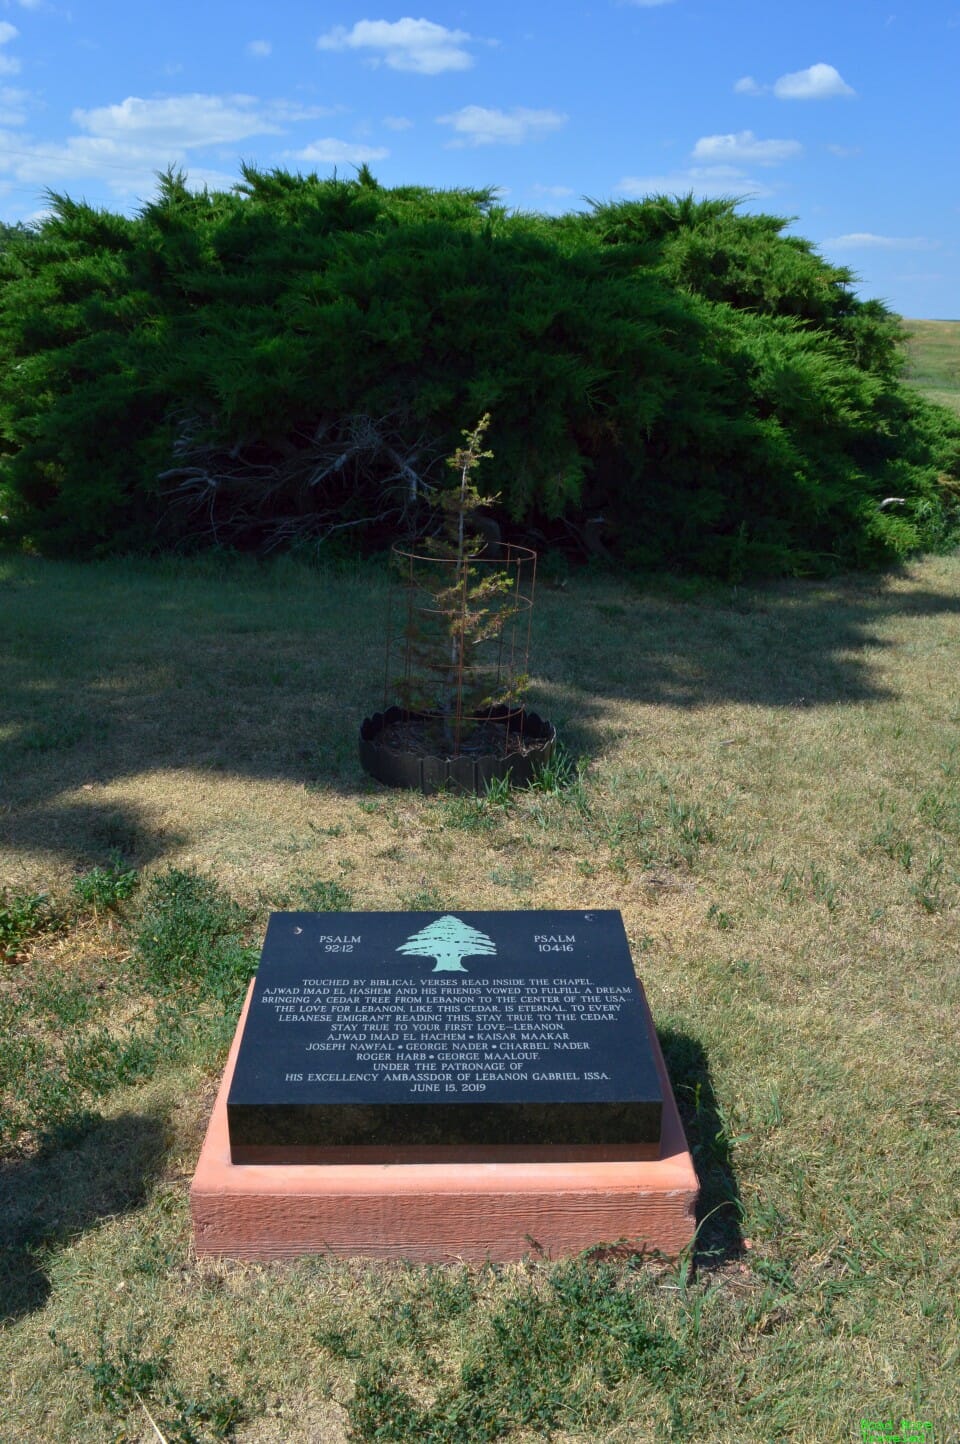 Cedar tree from Lebanon